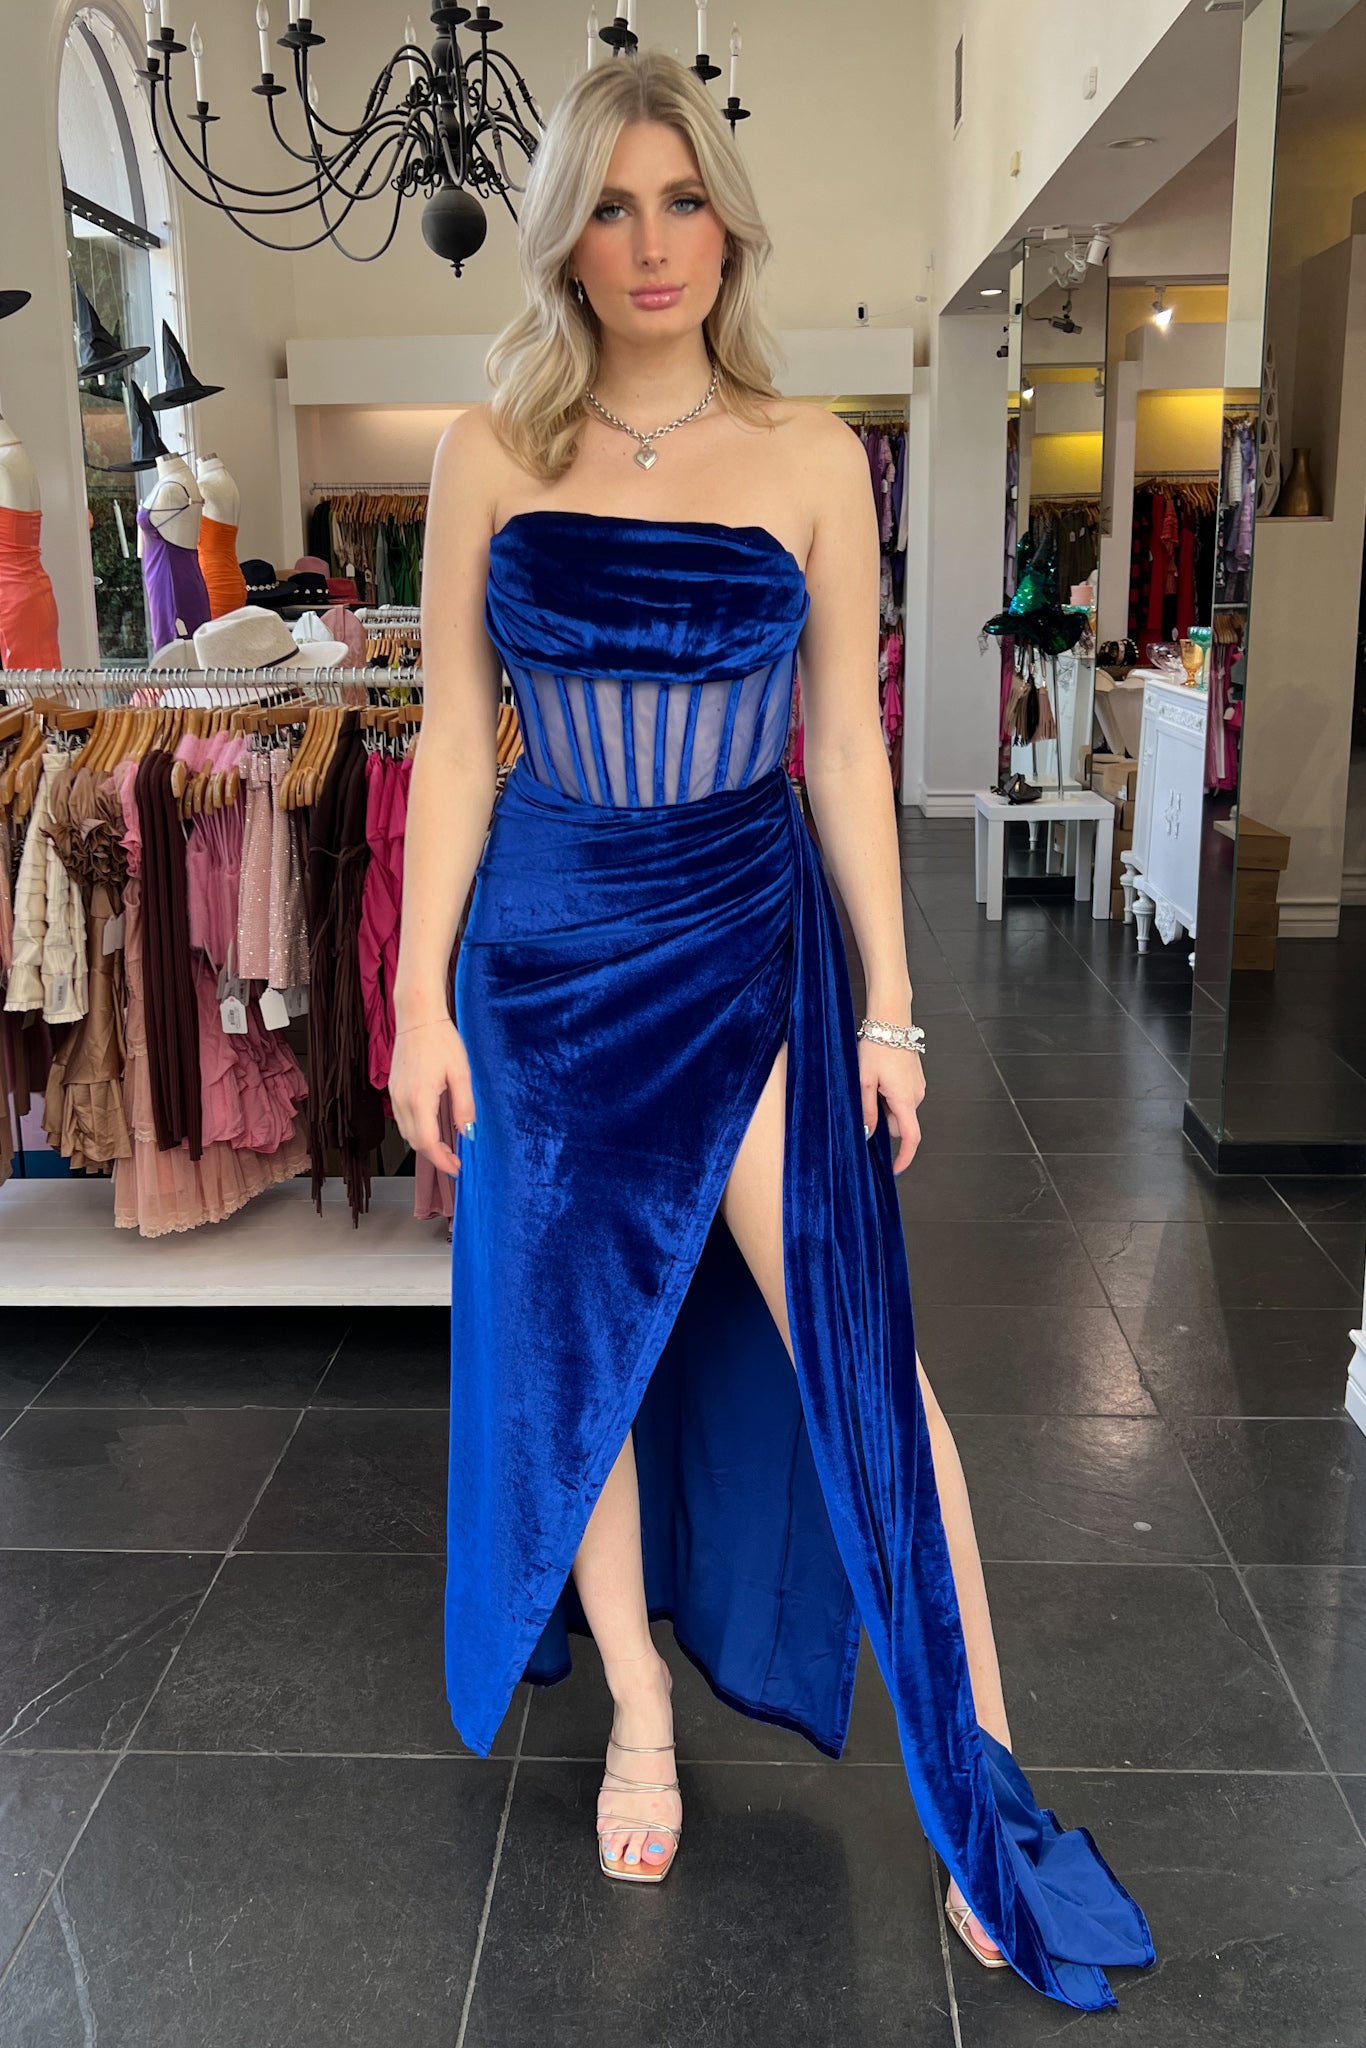 At The Met Dress-Royal Blue